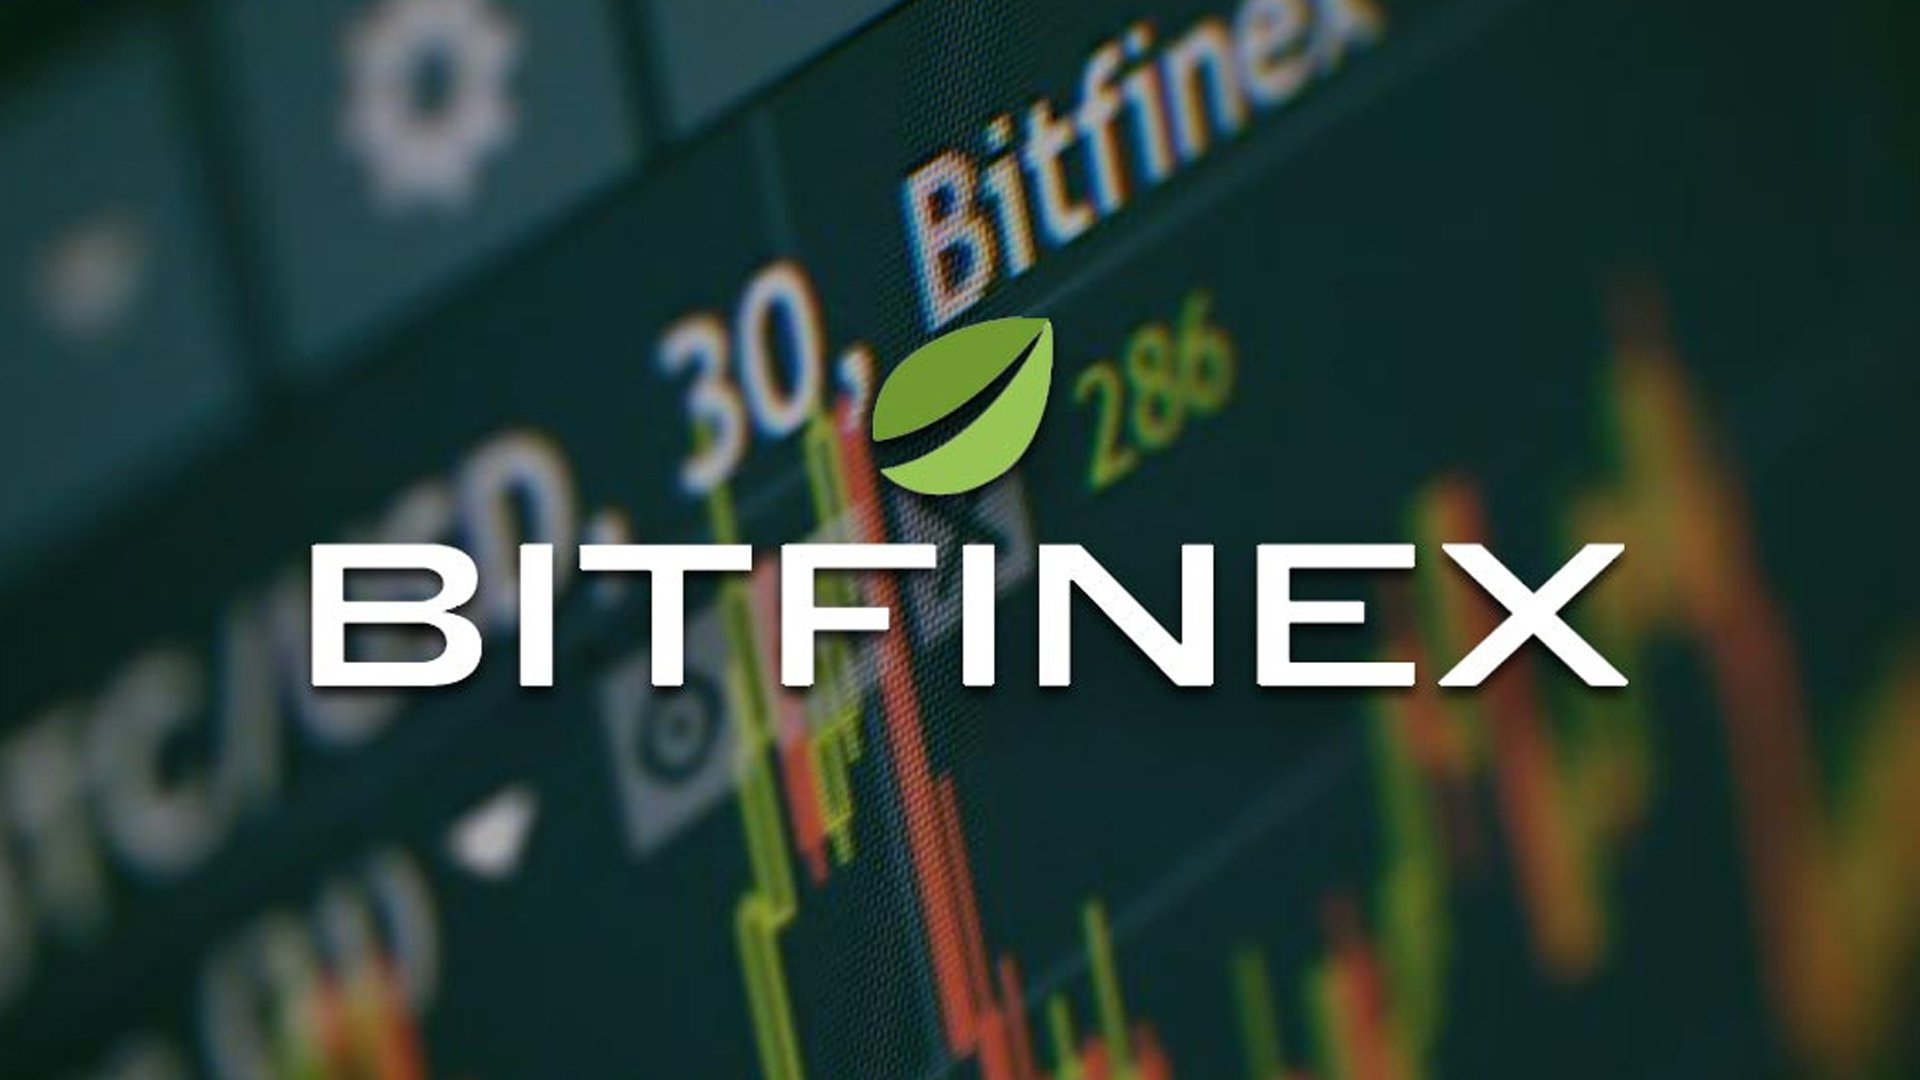 bitfinex saldirganlari 2 5 milyar dolar degerinde bitcoin tasidi 5